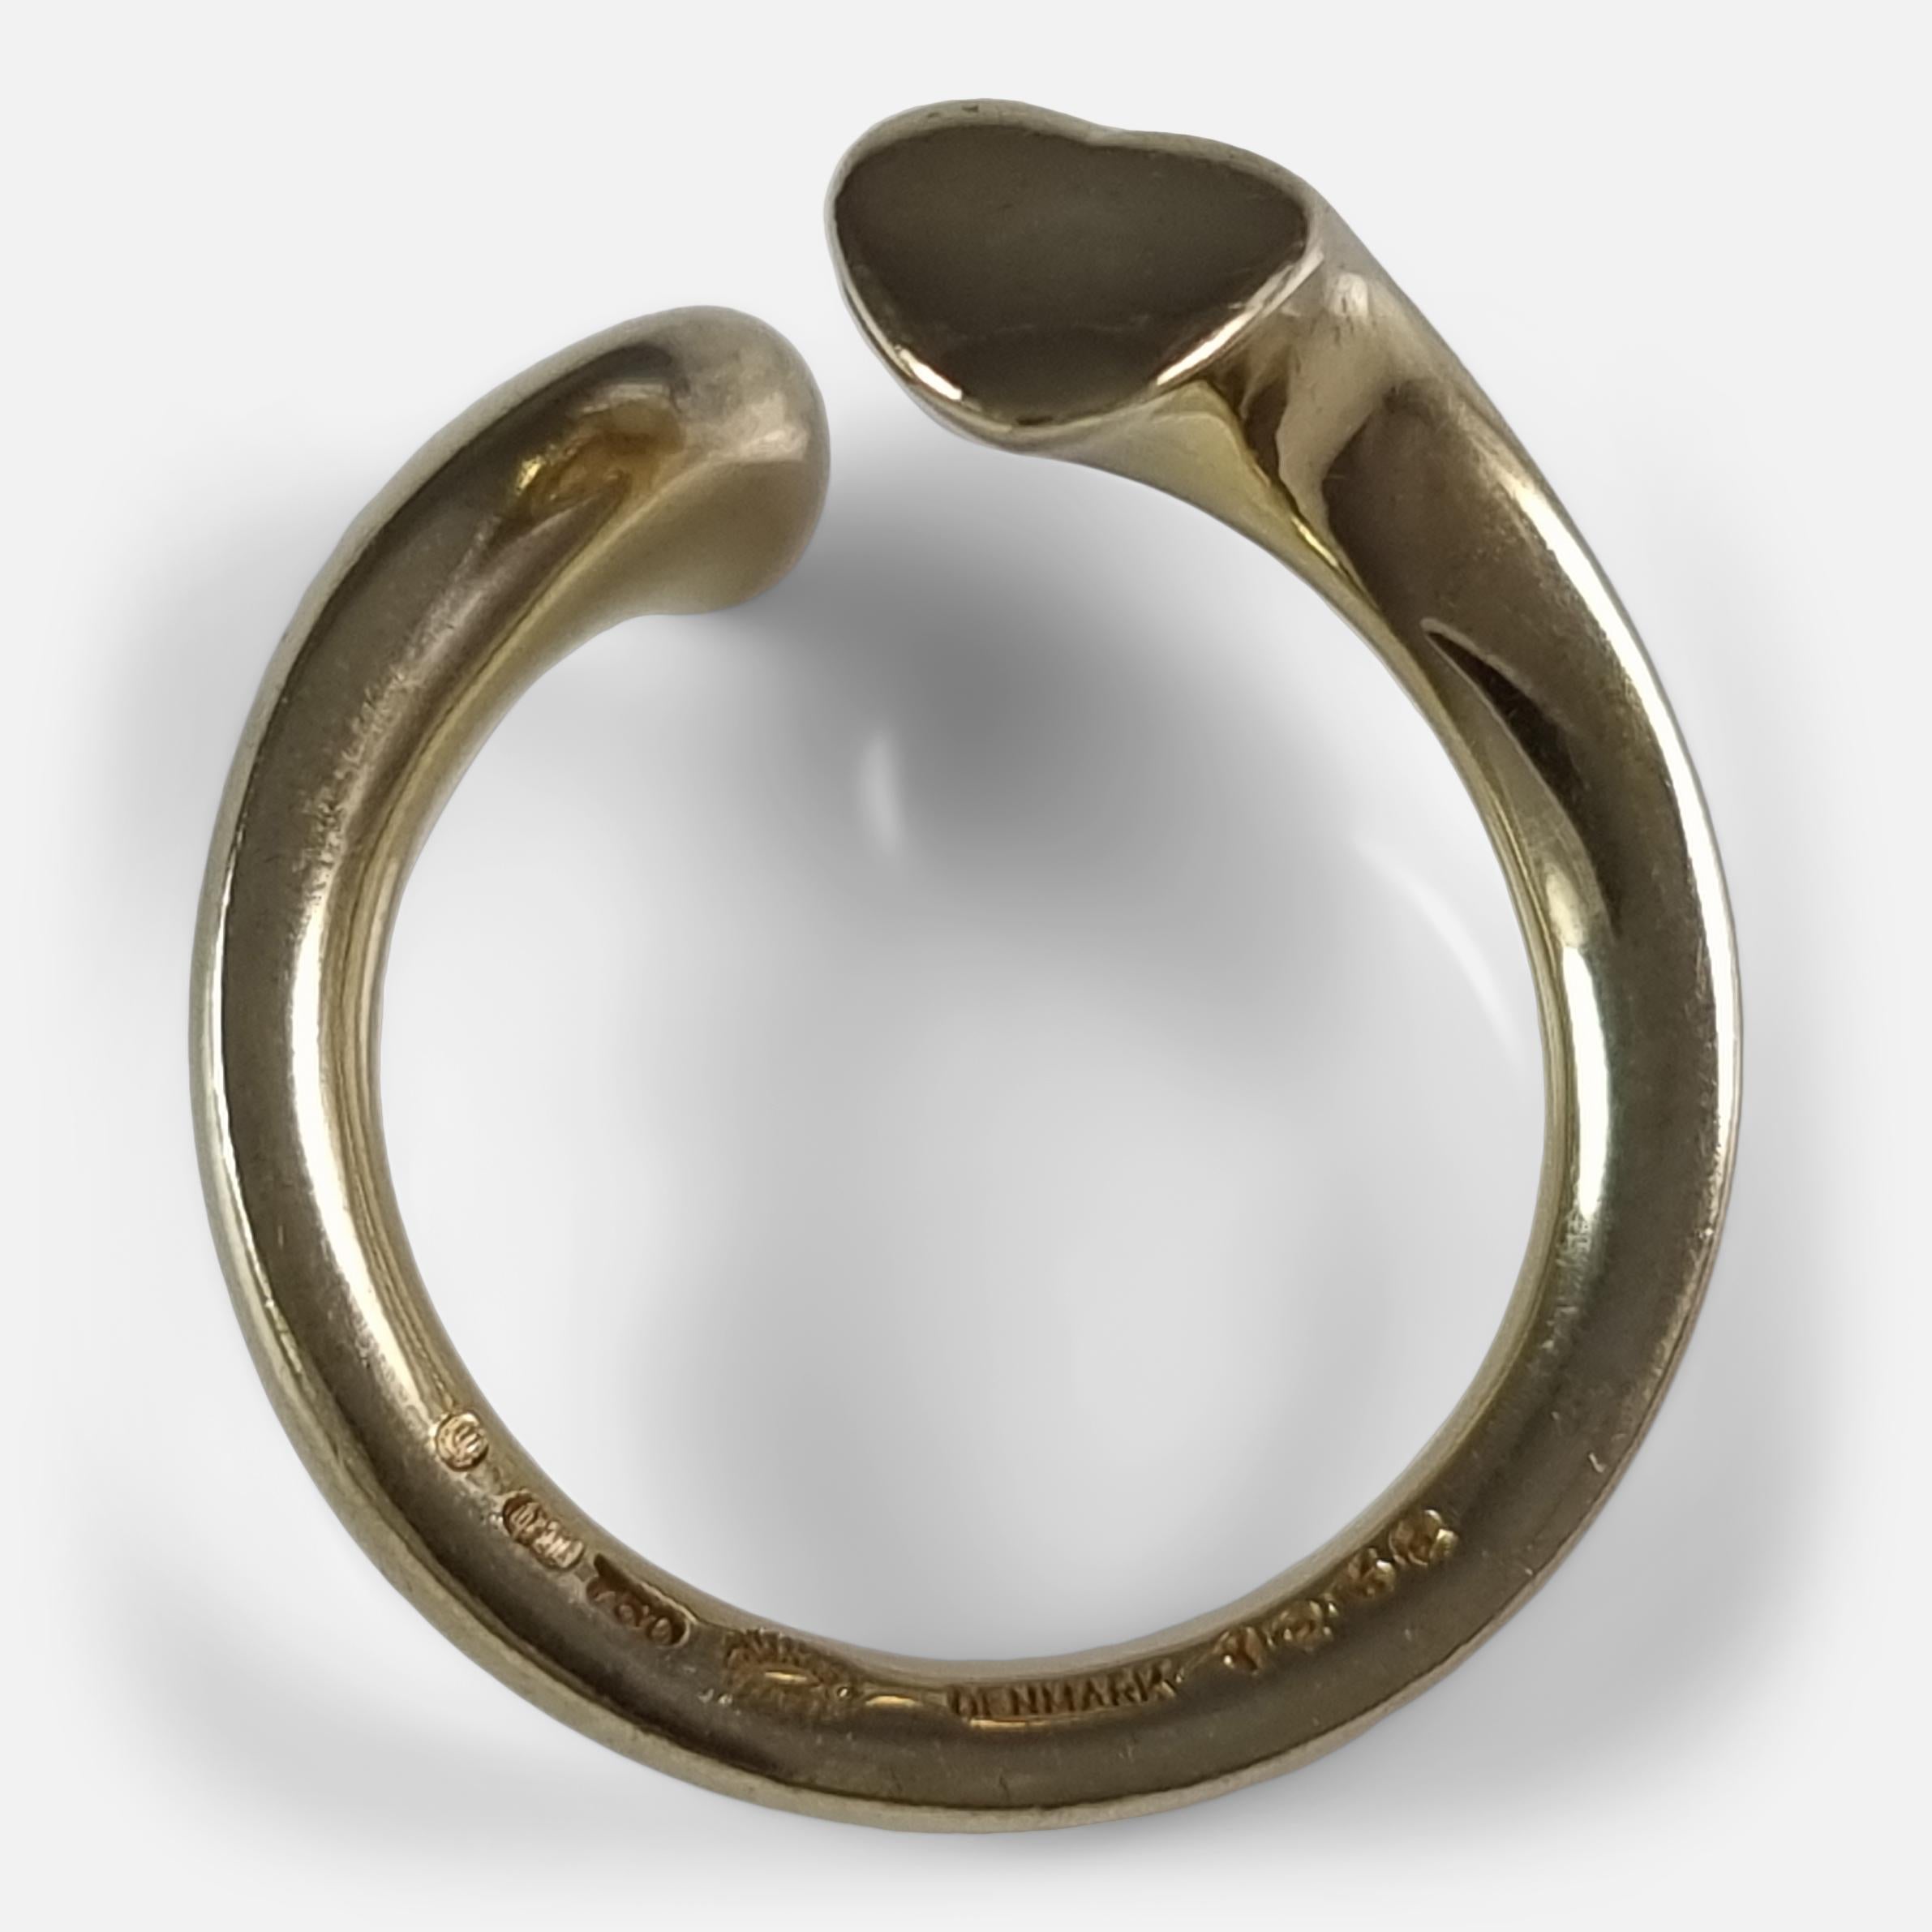 Georg Jensen 18ct Gold and Silver 'Devoted Heart' Ring, Regitze Overgaard 2